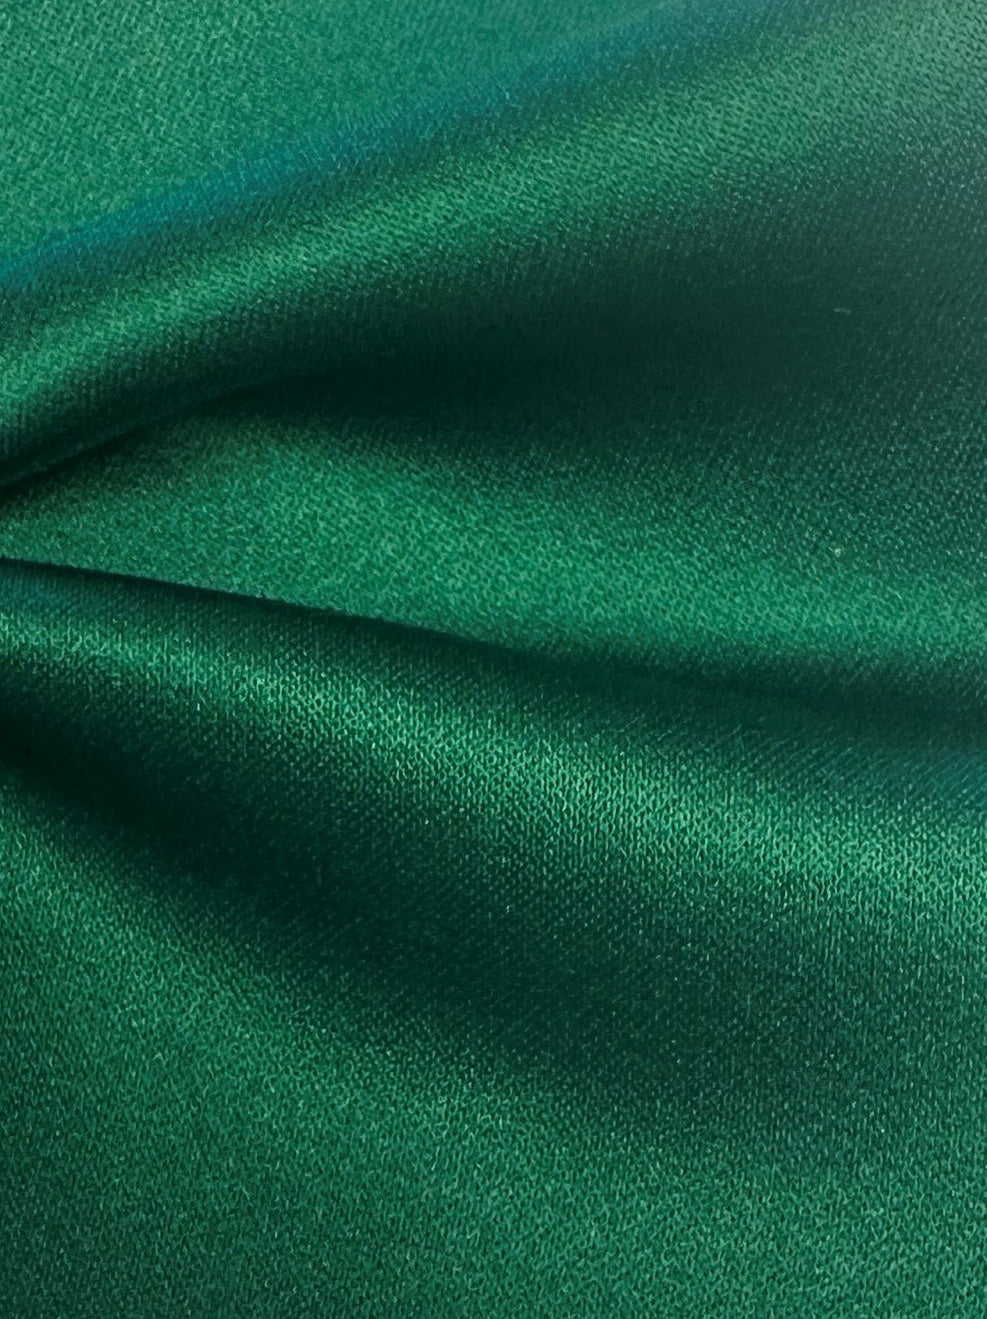 Green Polyester Duchess Satin - Contessa